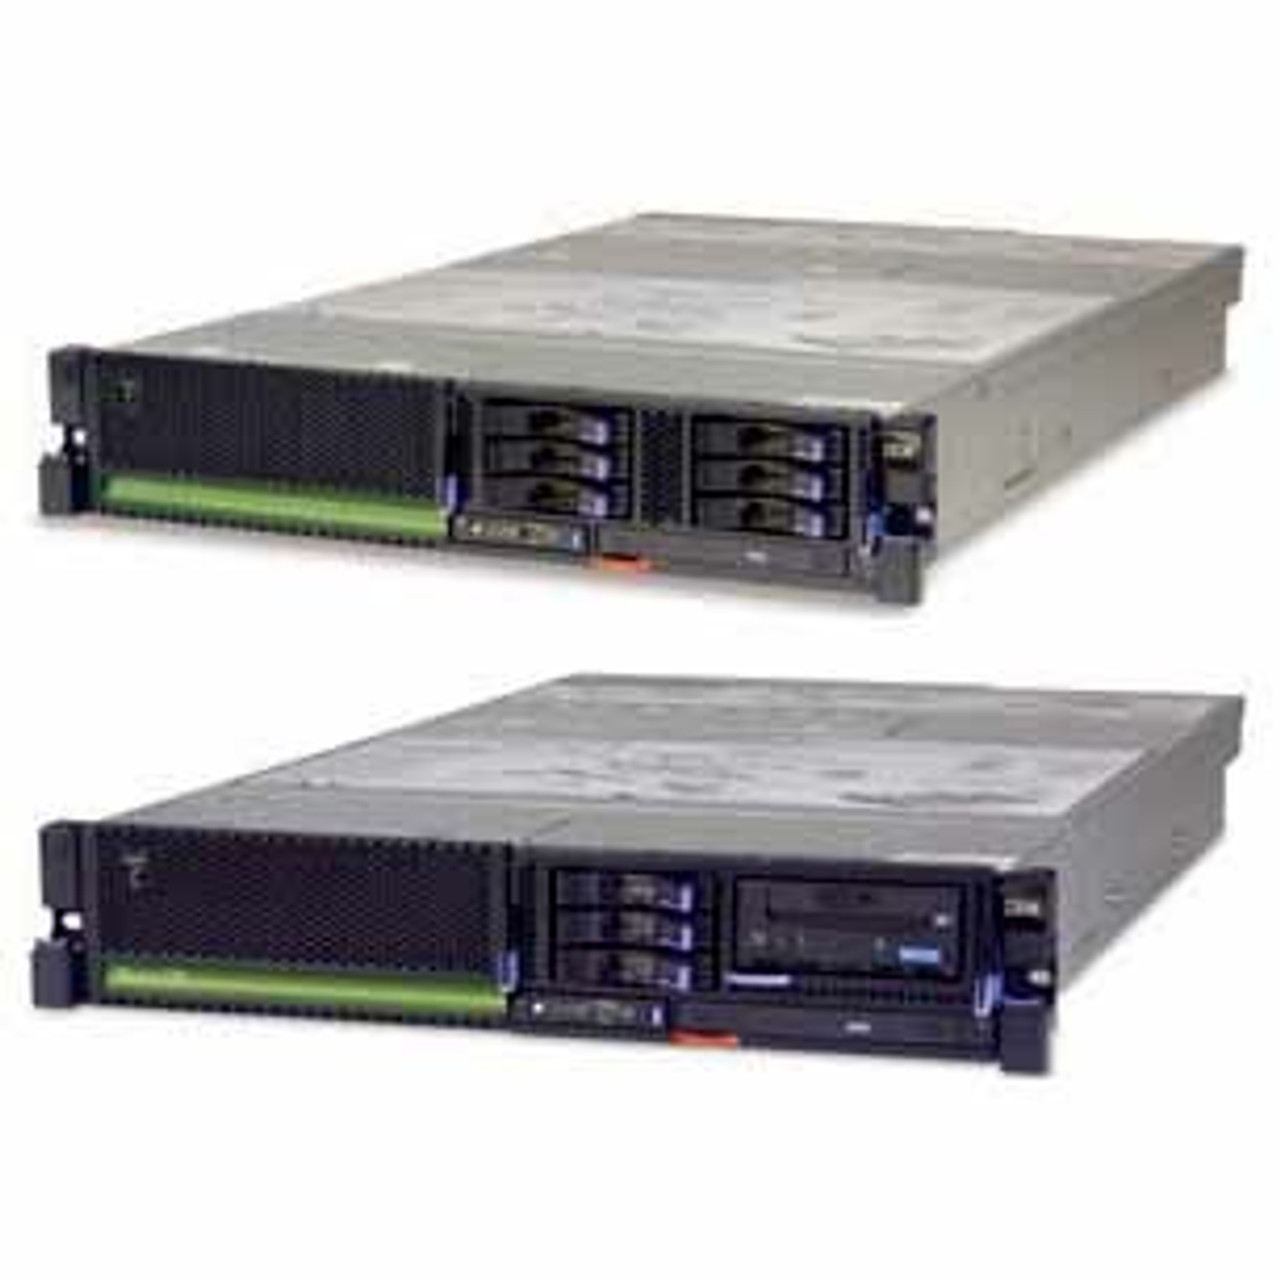 IBM 8268-E1D iSeries Servers